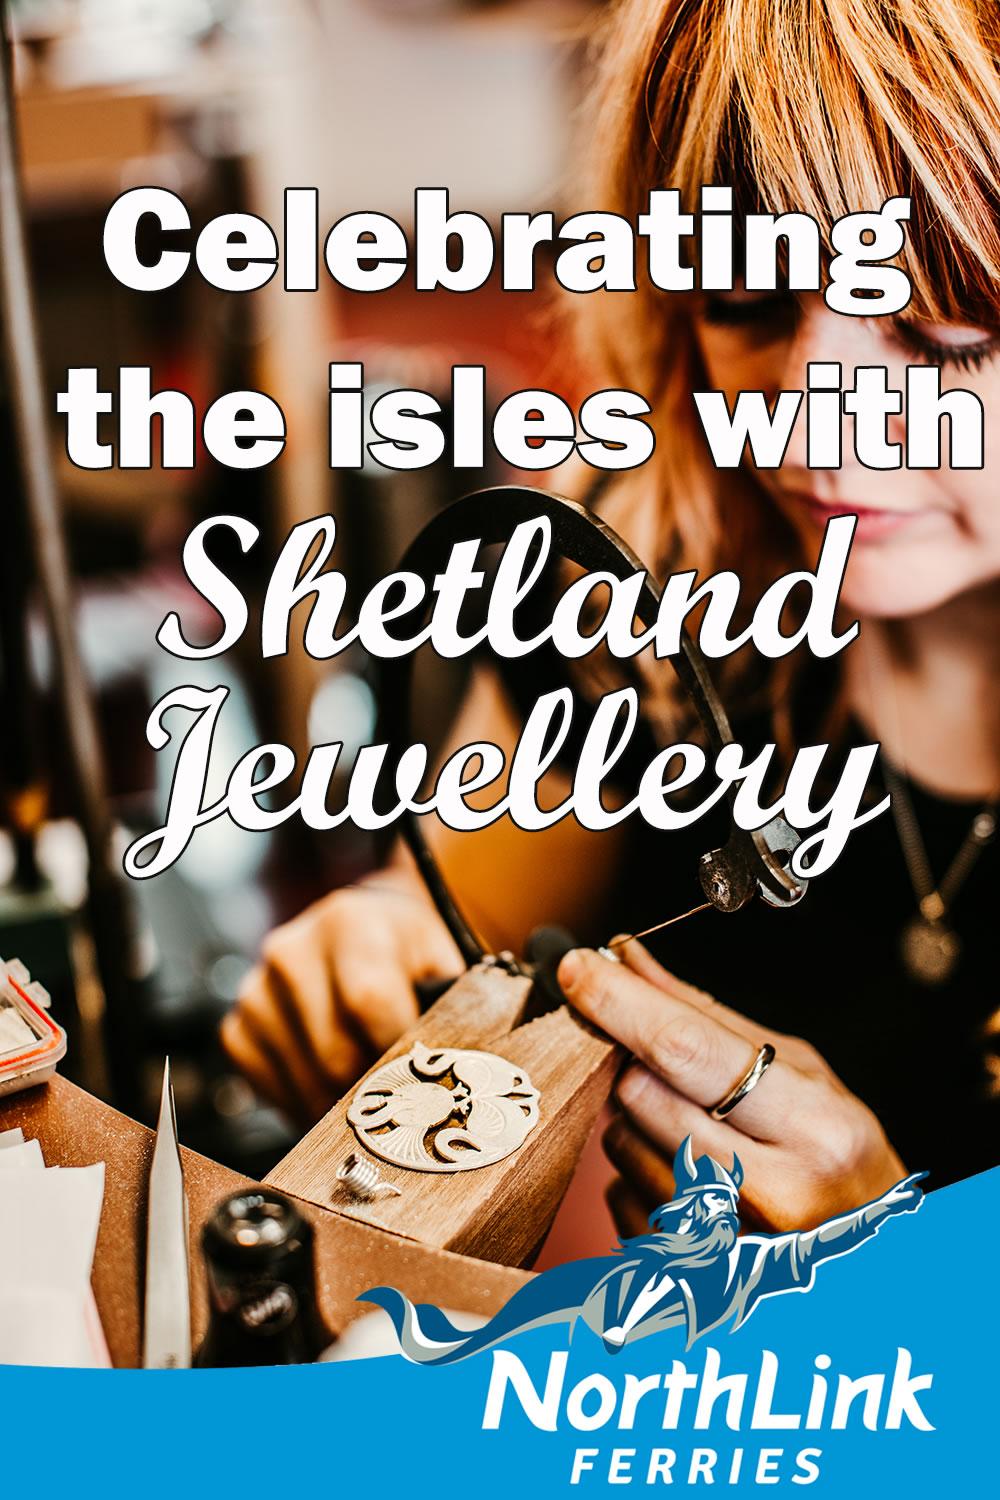 Celebrating the isles with Shetland Jewellery